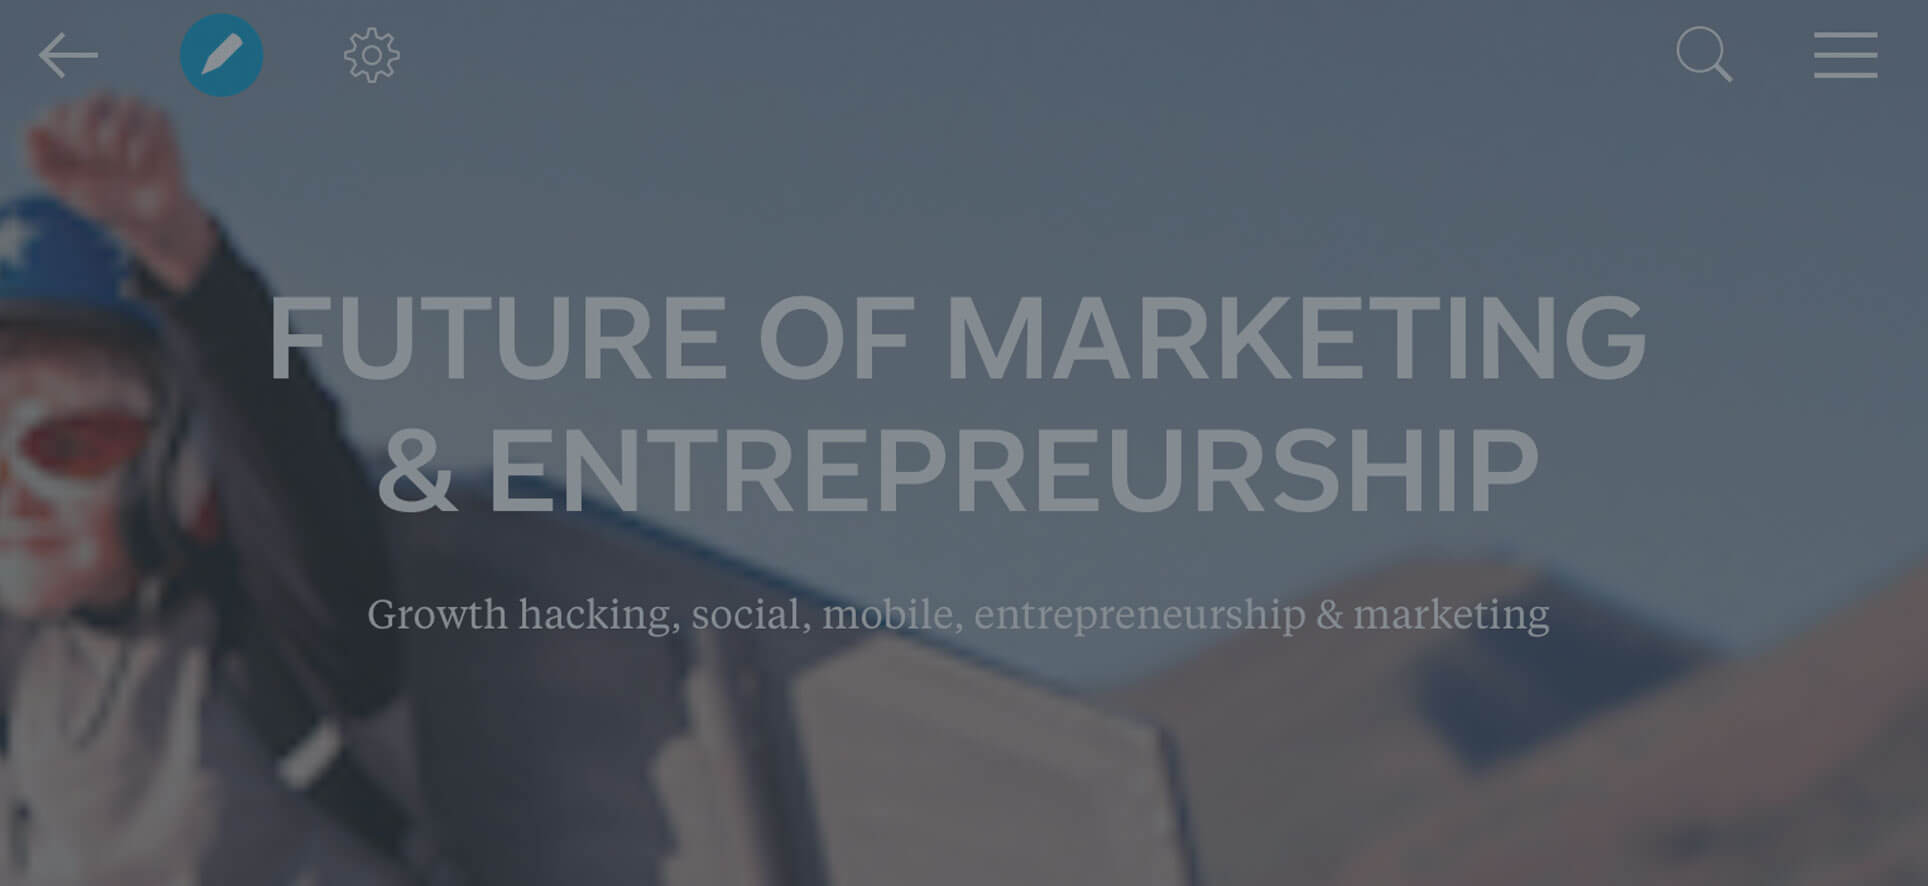 The Future of Marketing and Entrepreneurship